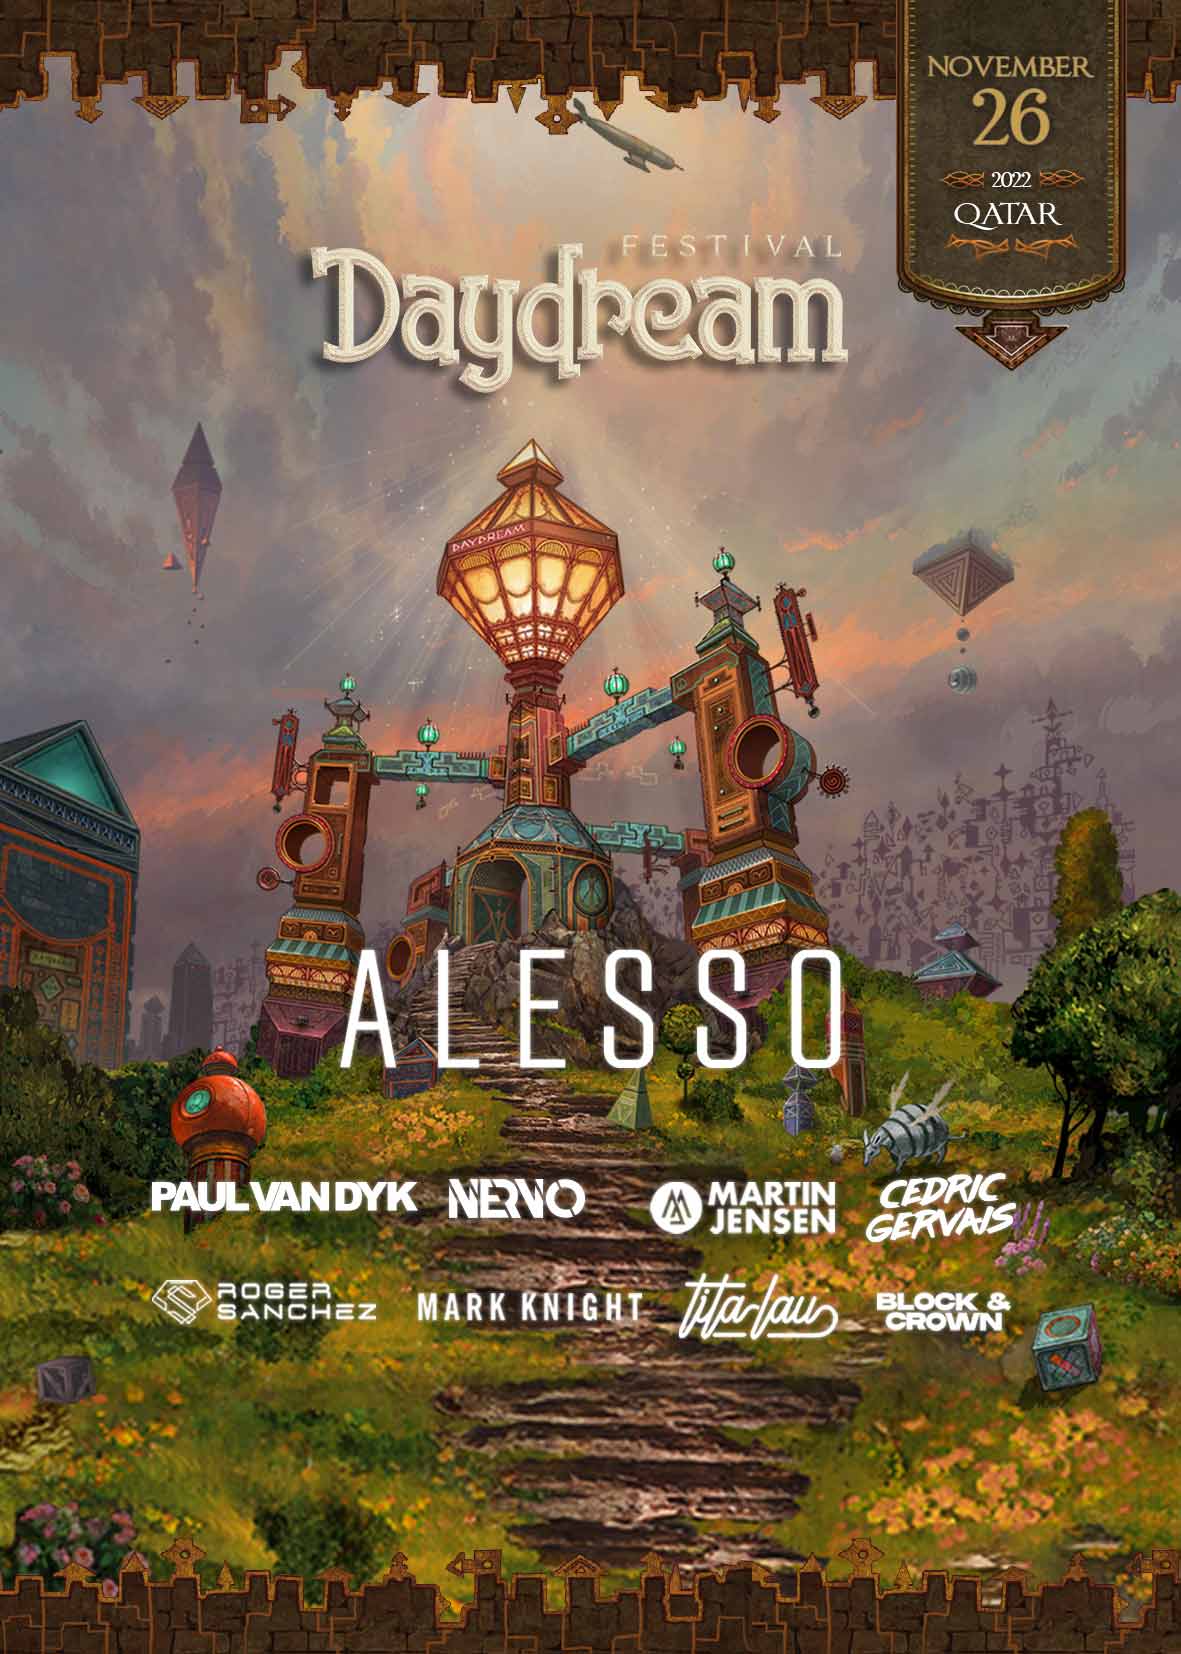 Daydream Music Festival 26th November